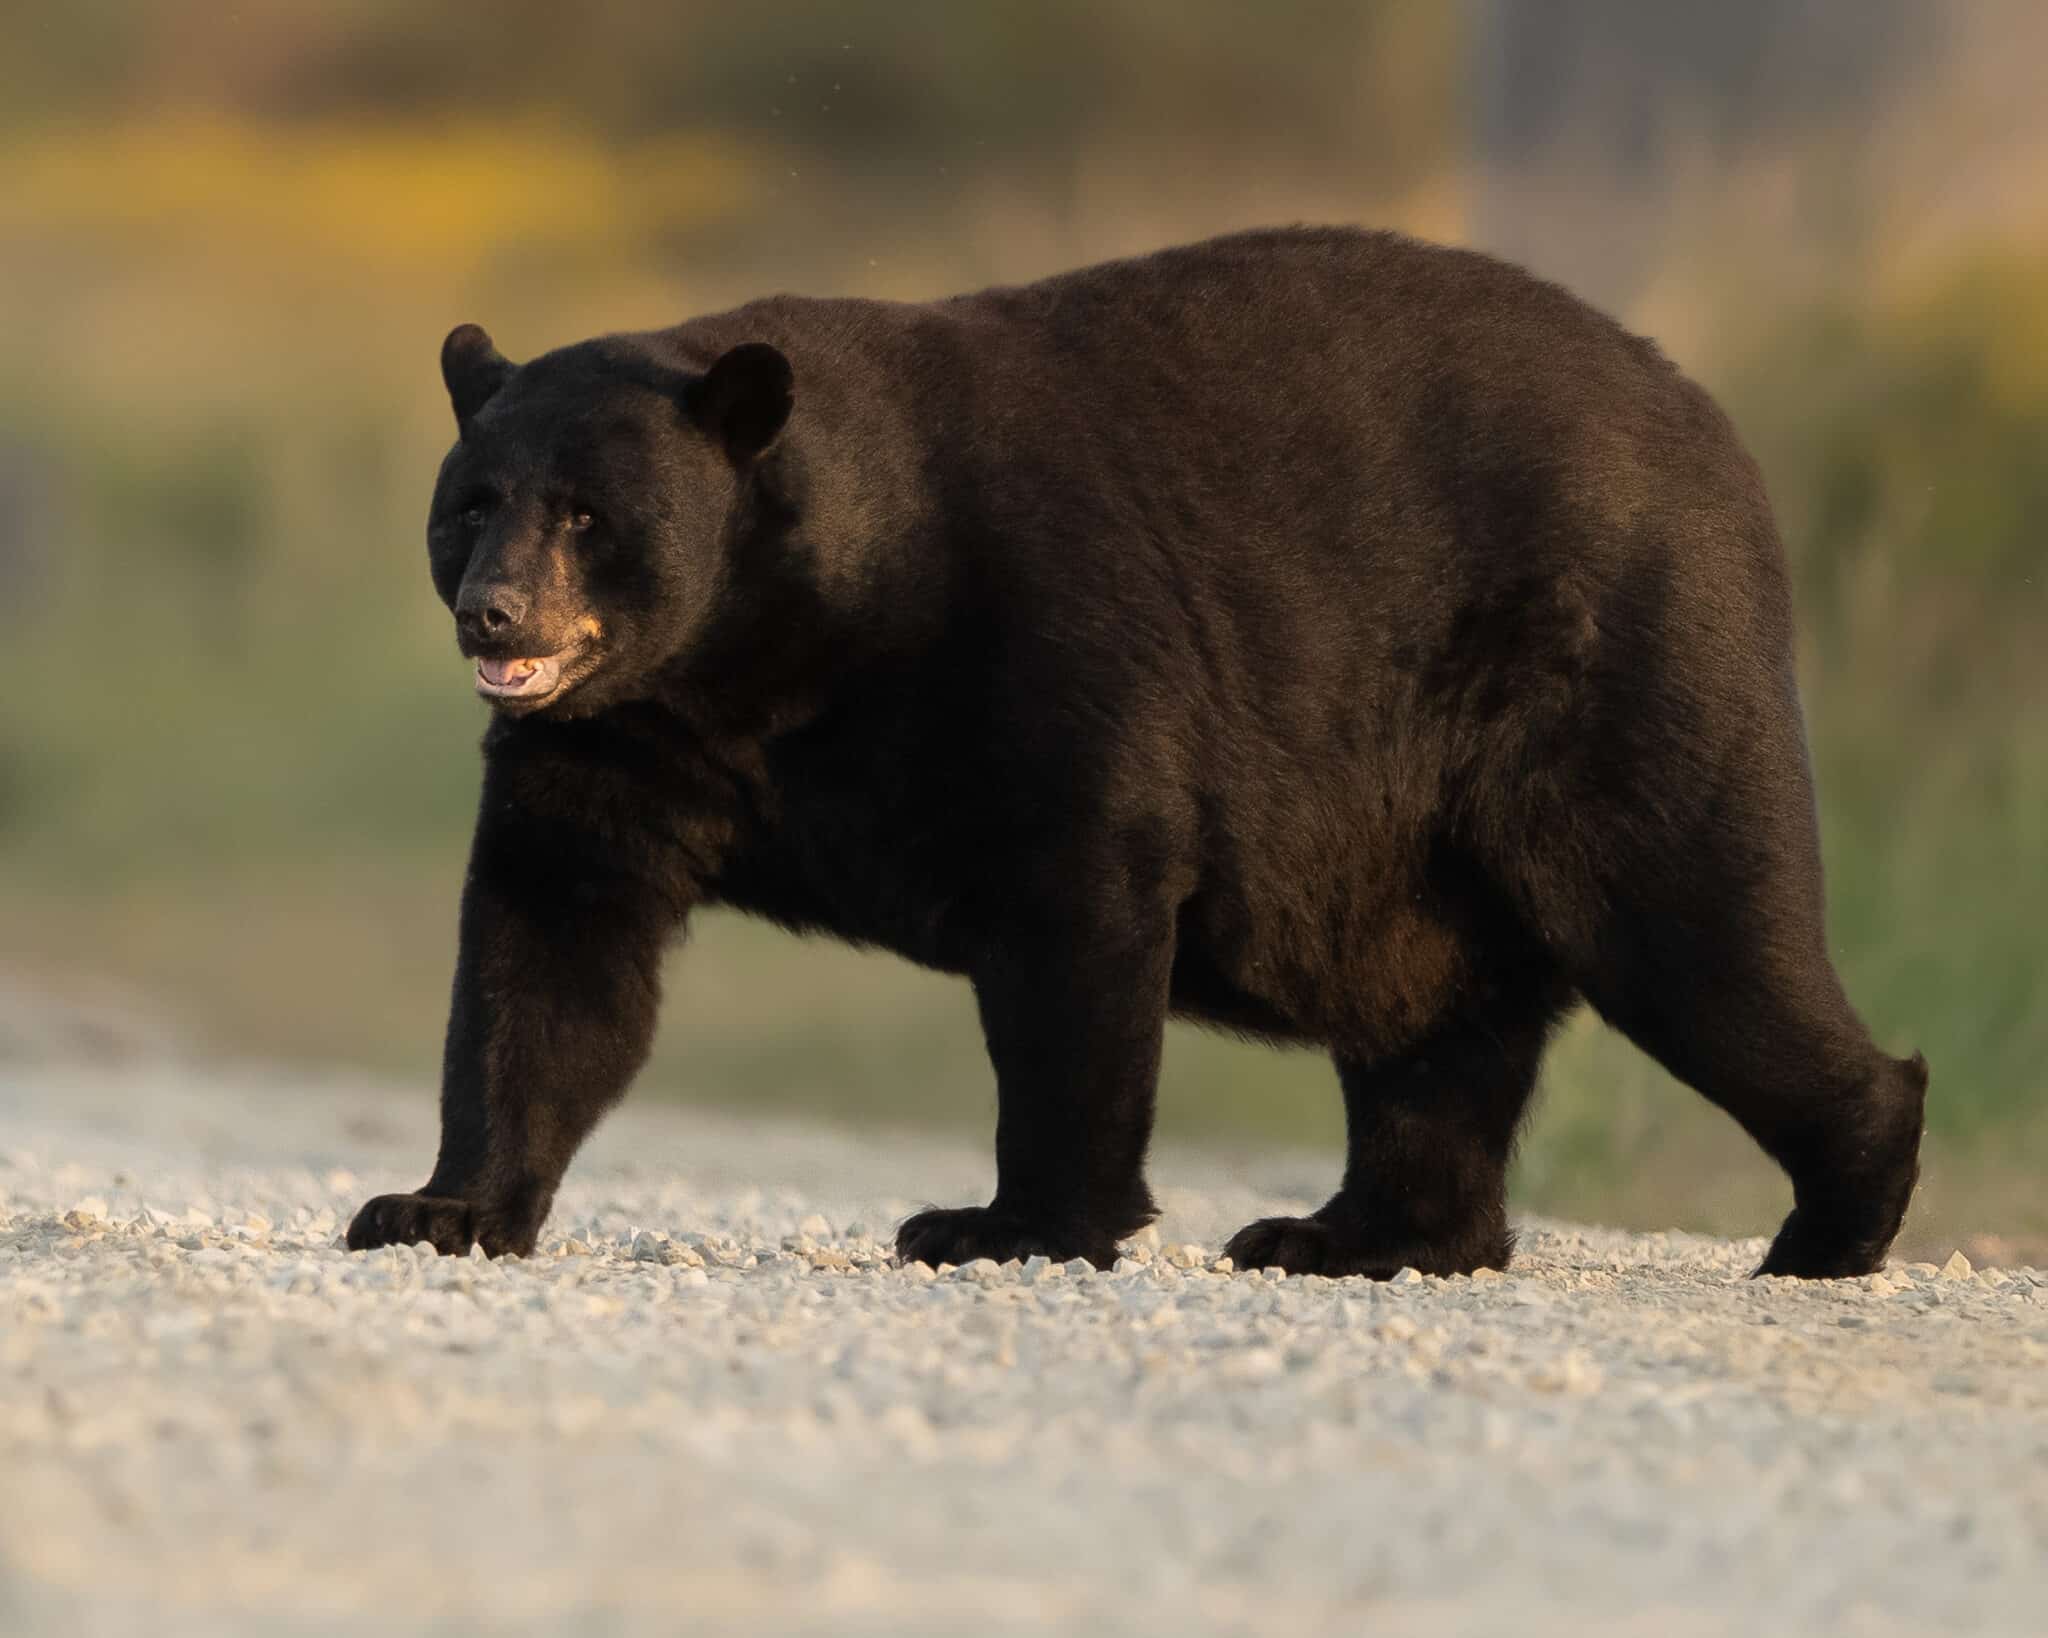 Large black bear crossing a rural road.